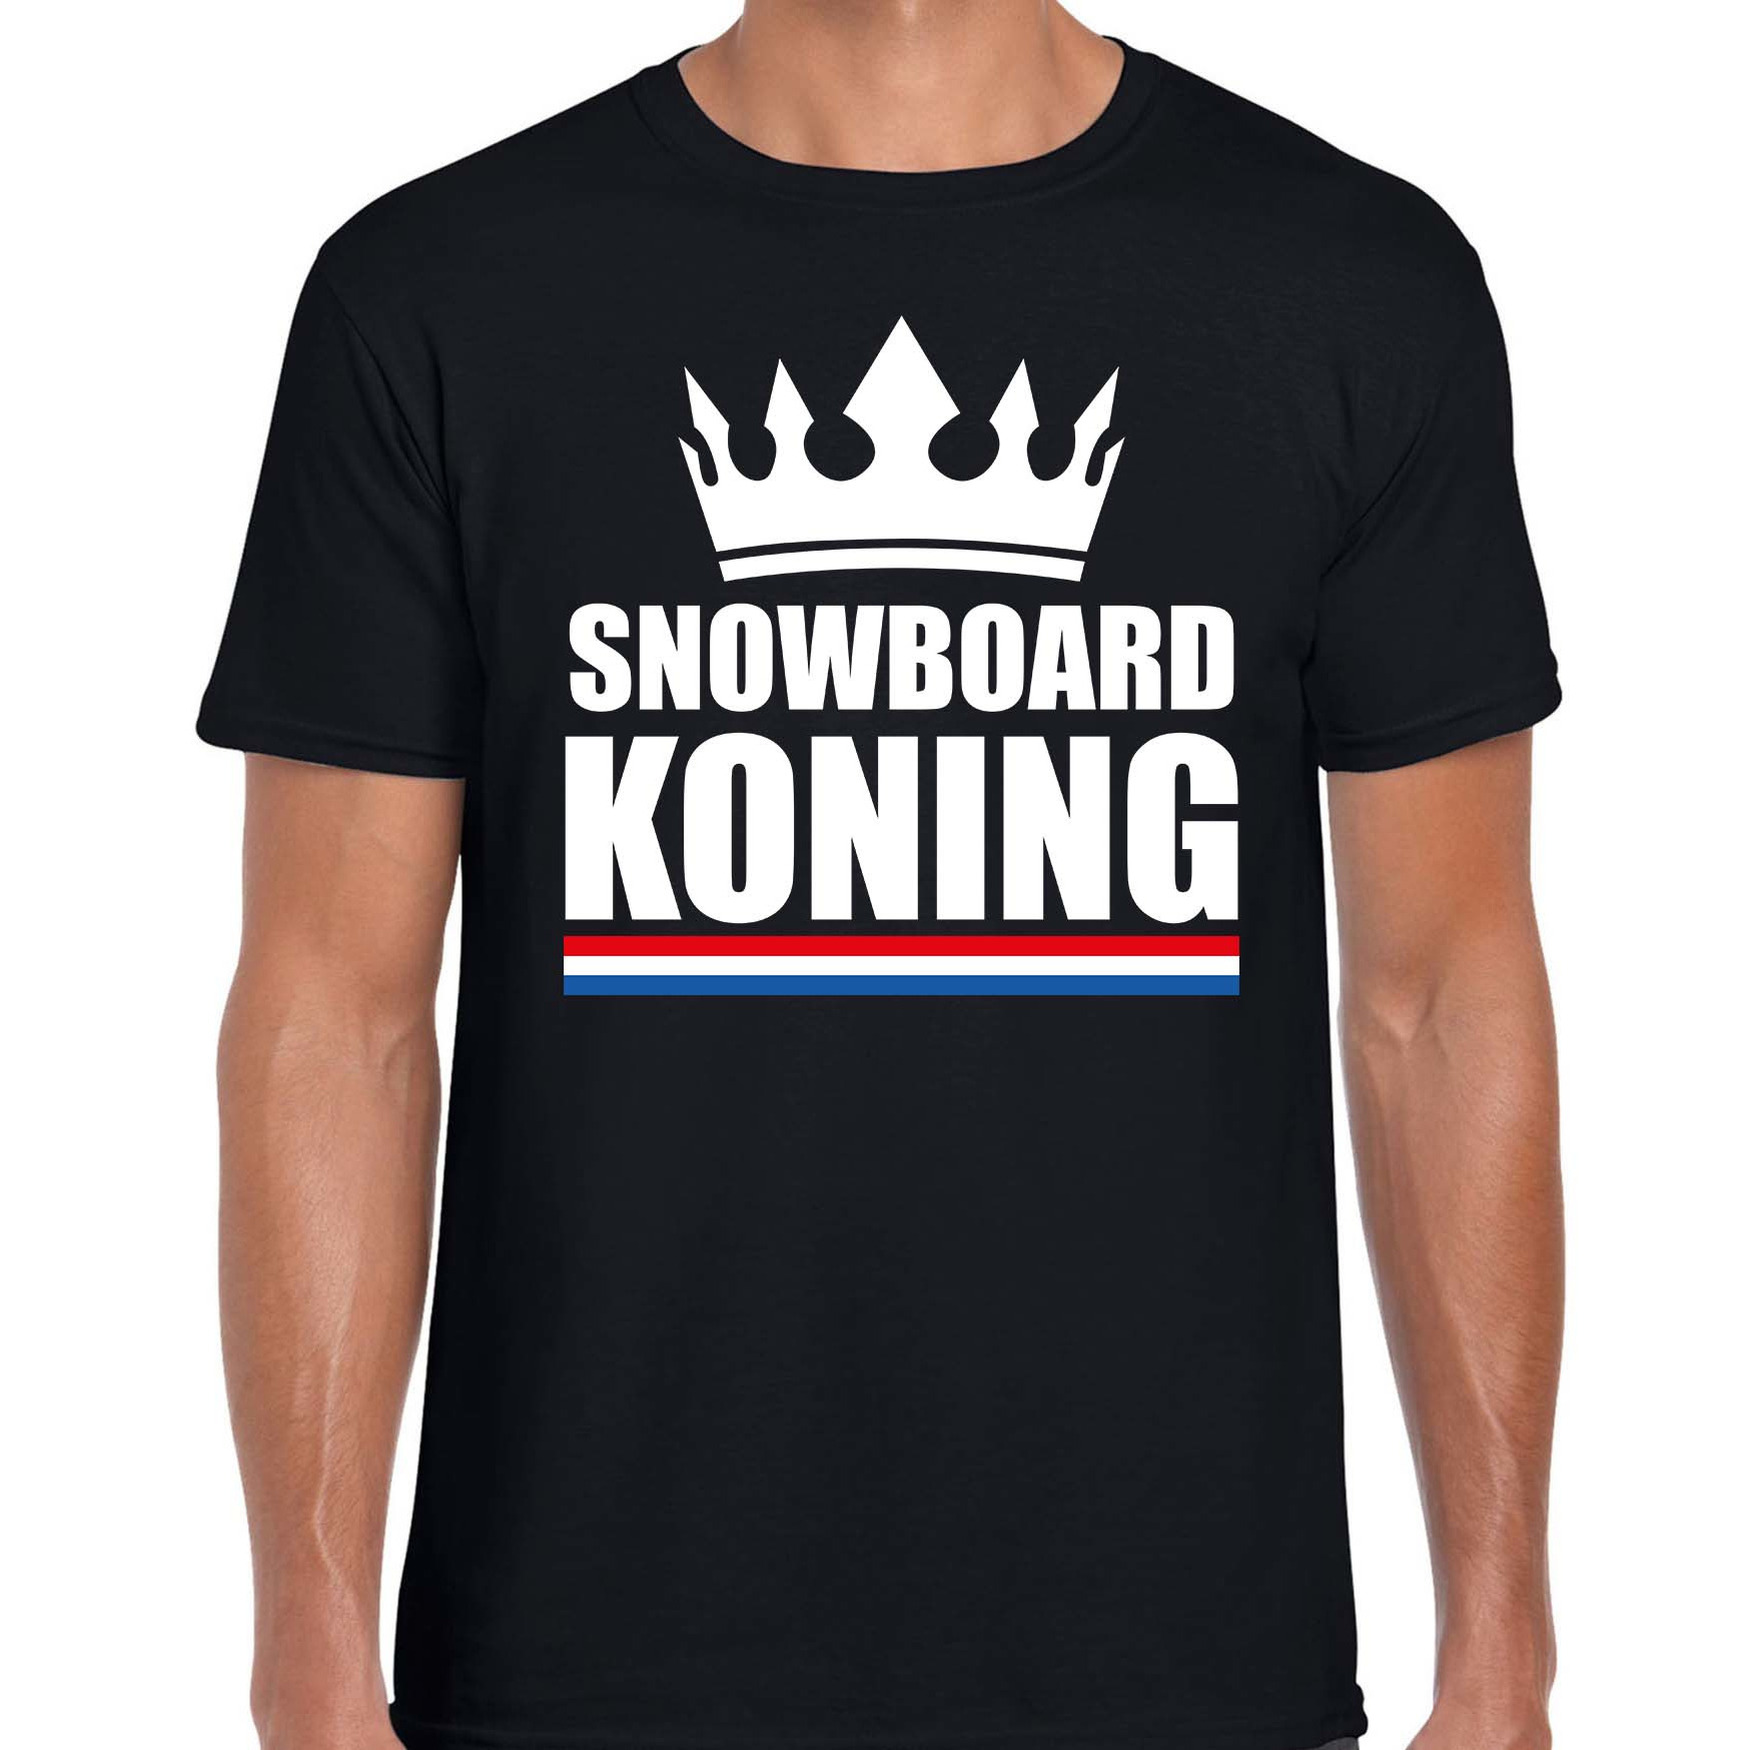 Snowboard koning apres ski t-shirt zwart heren Sport-hobby shirts